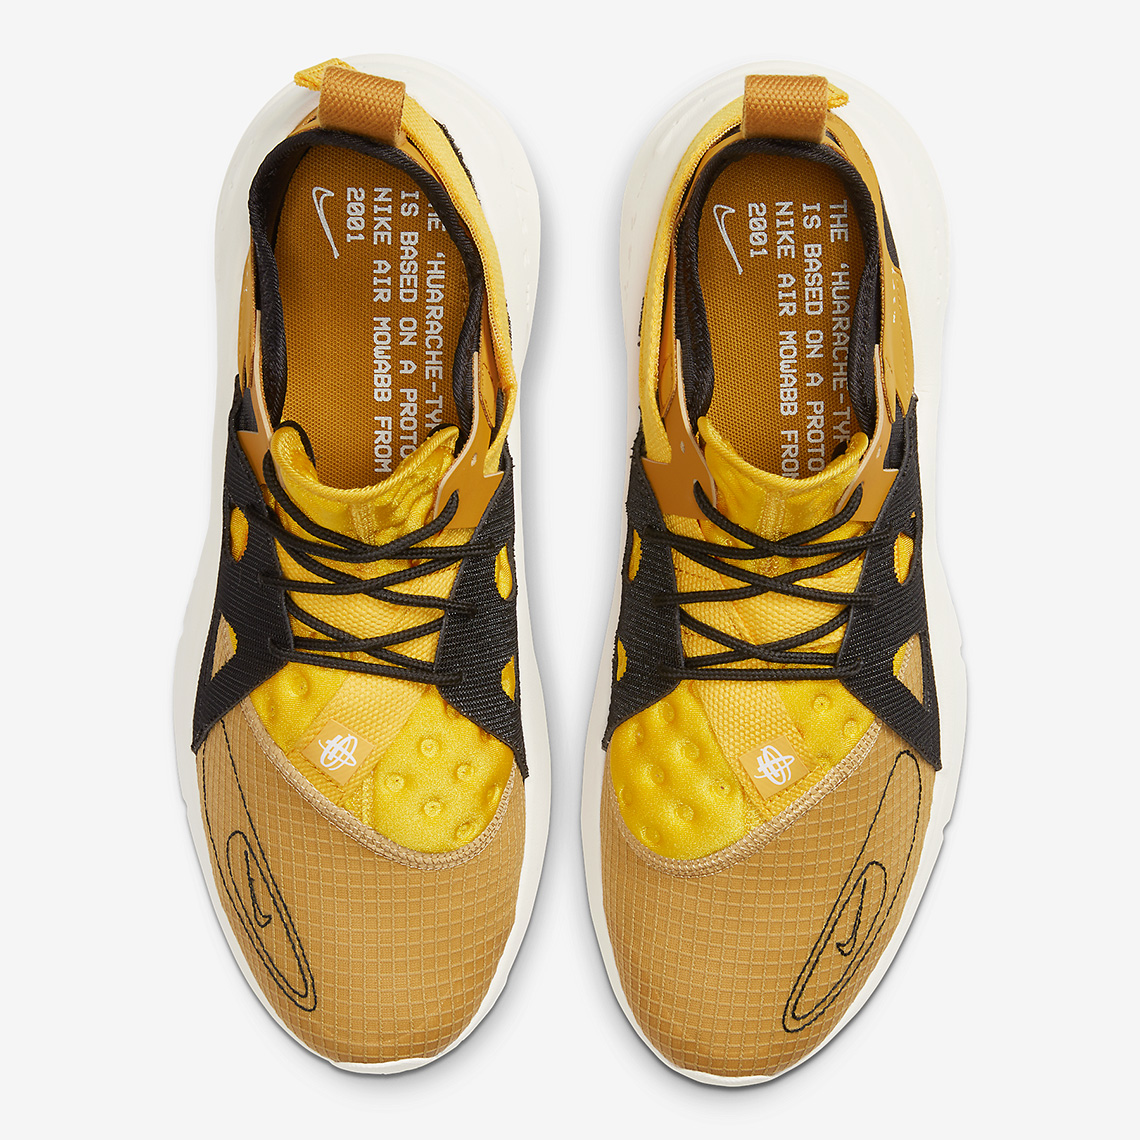 Nike Huarache Type Golden Bq5102 700 4